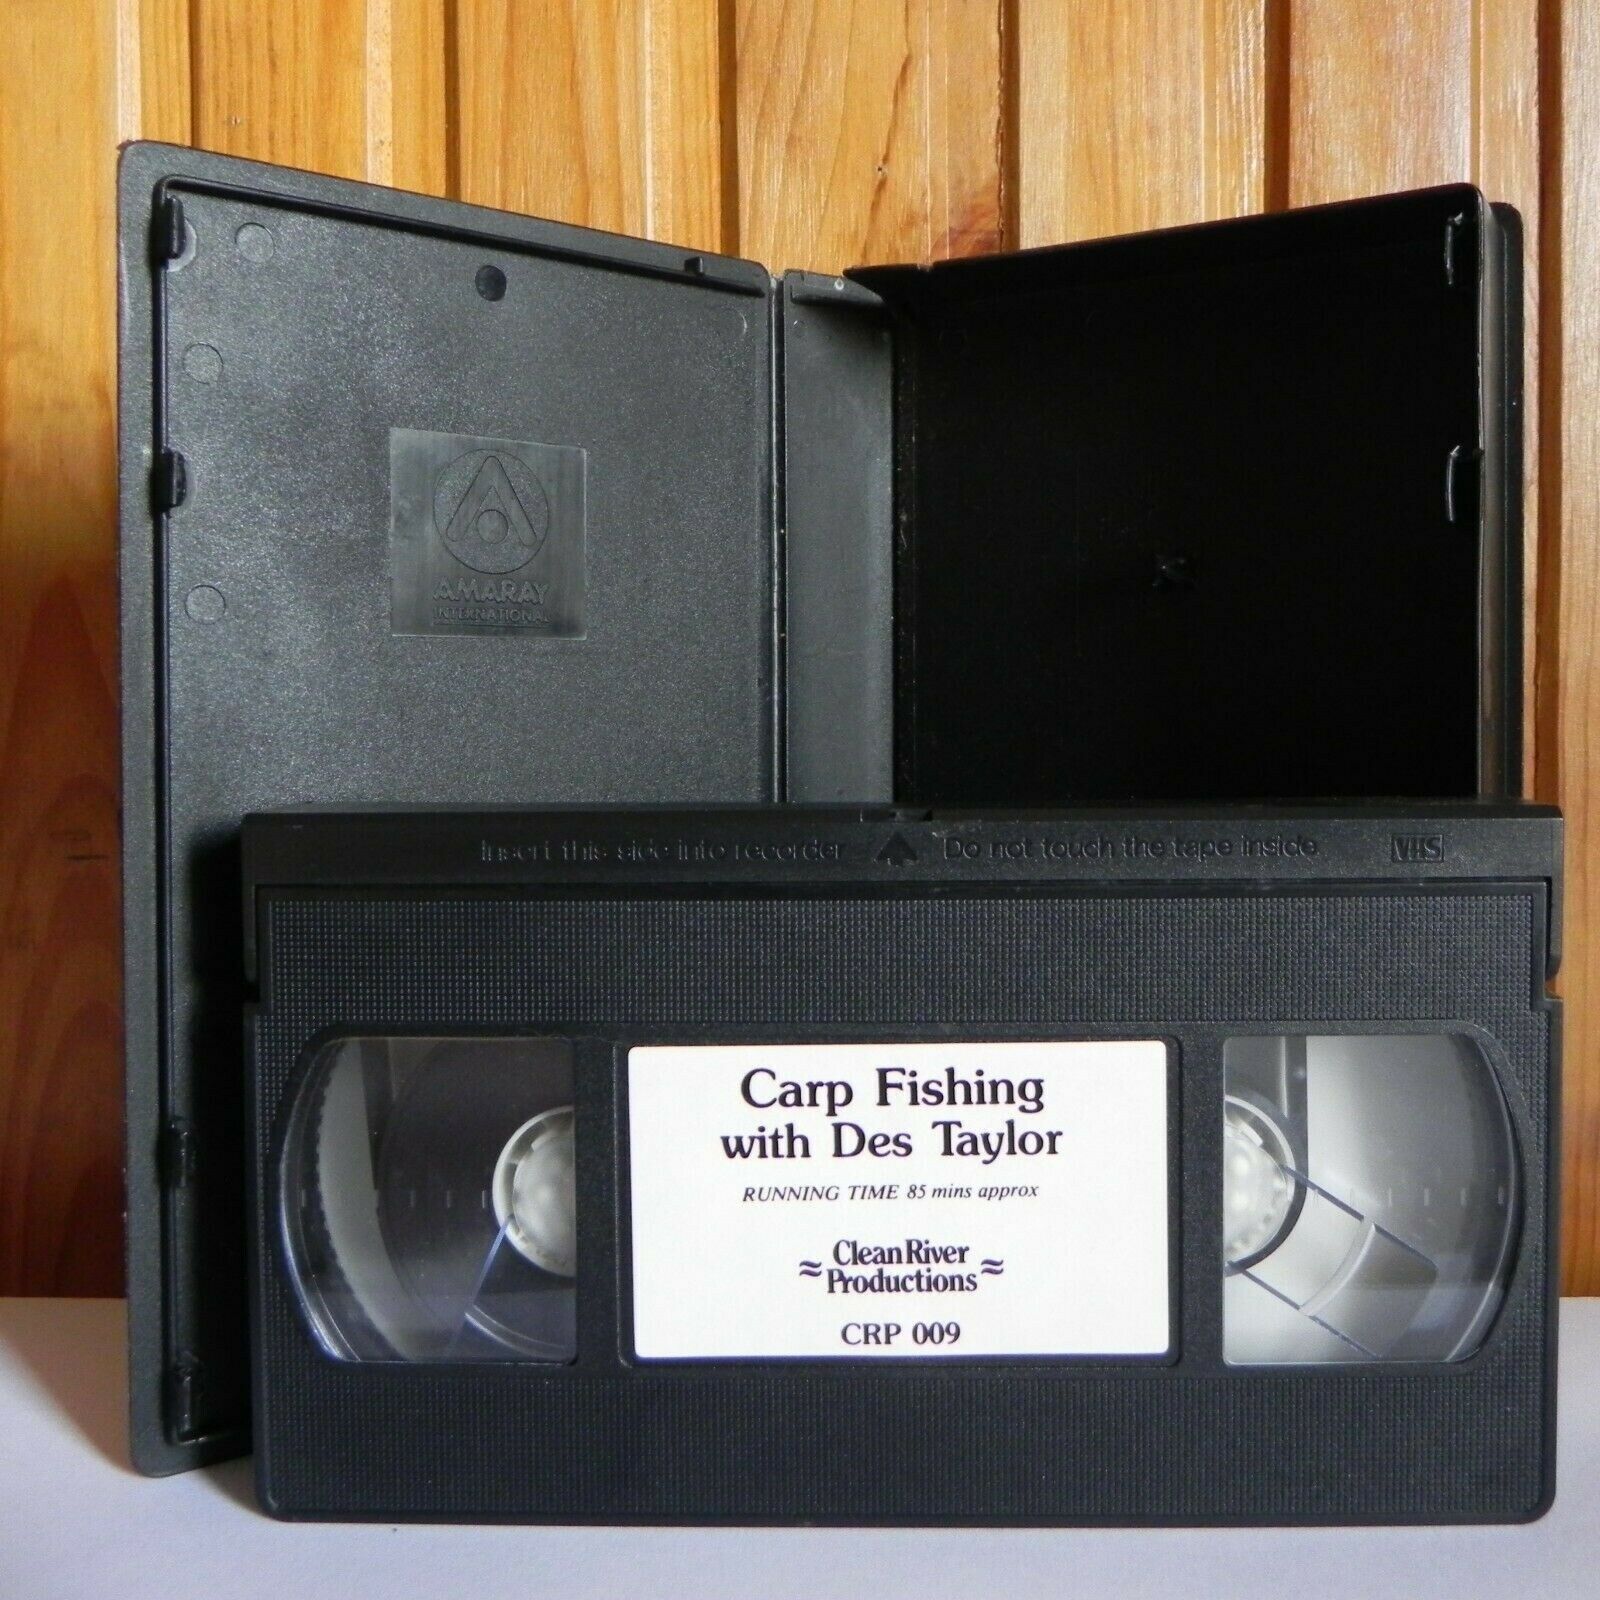 Clean River Fishing - Carp Fishing - Des Taylor - Secrets - Baits - Rigs - VHS-